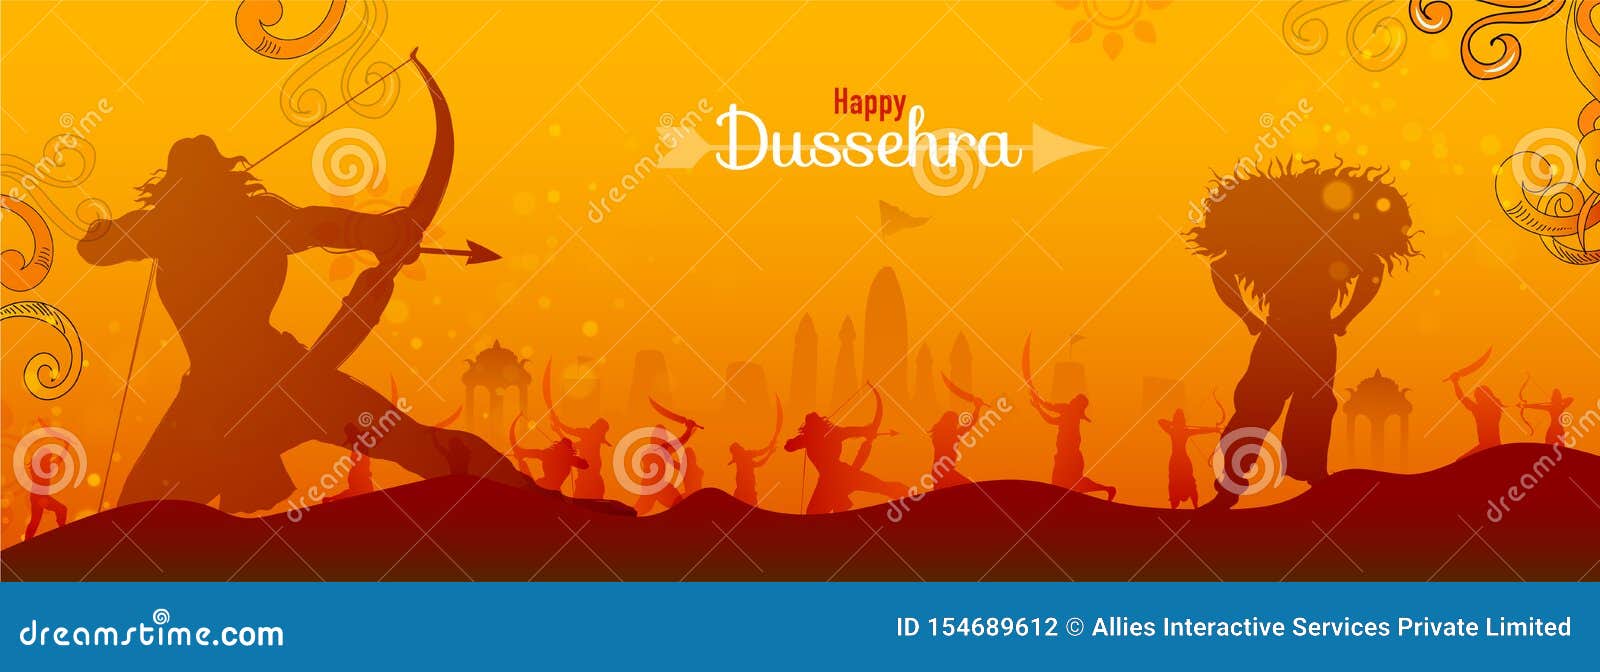 Advertising Happy Dussehra Festival Banner or Header Design. Stock  Illustration - Illustration of banner, creative: 154689612